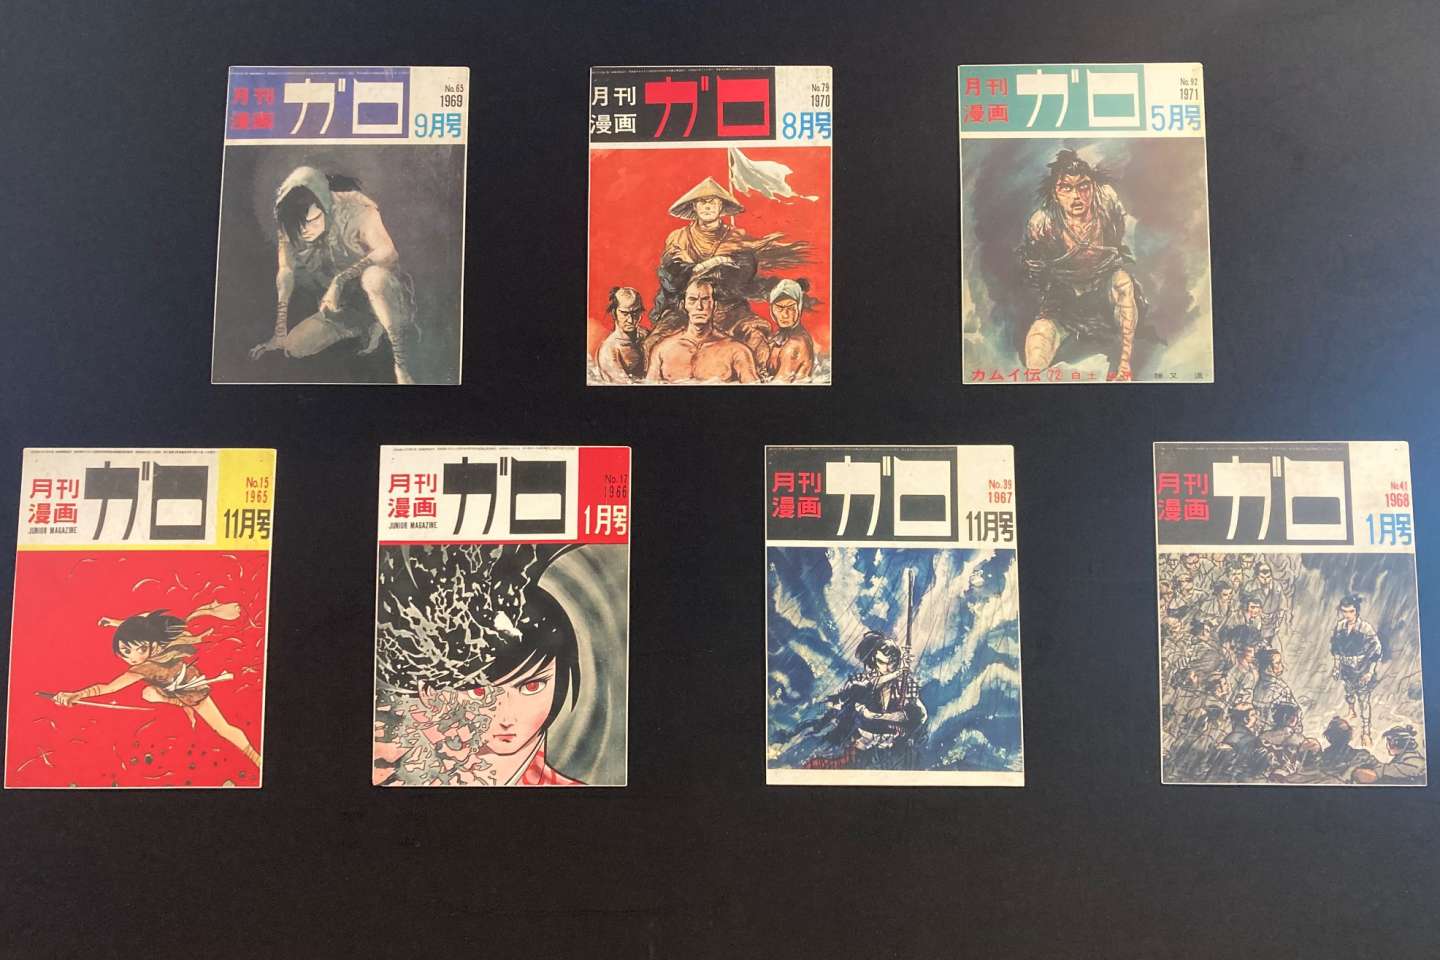 « Garo », le magazine avant-gardiste qui a révolutionné le manga